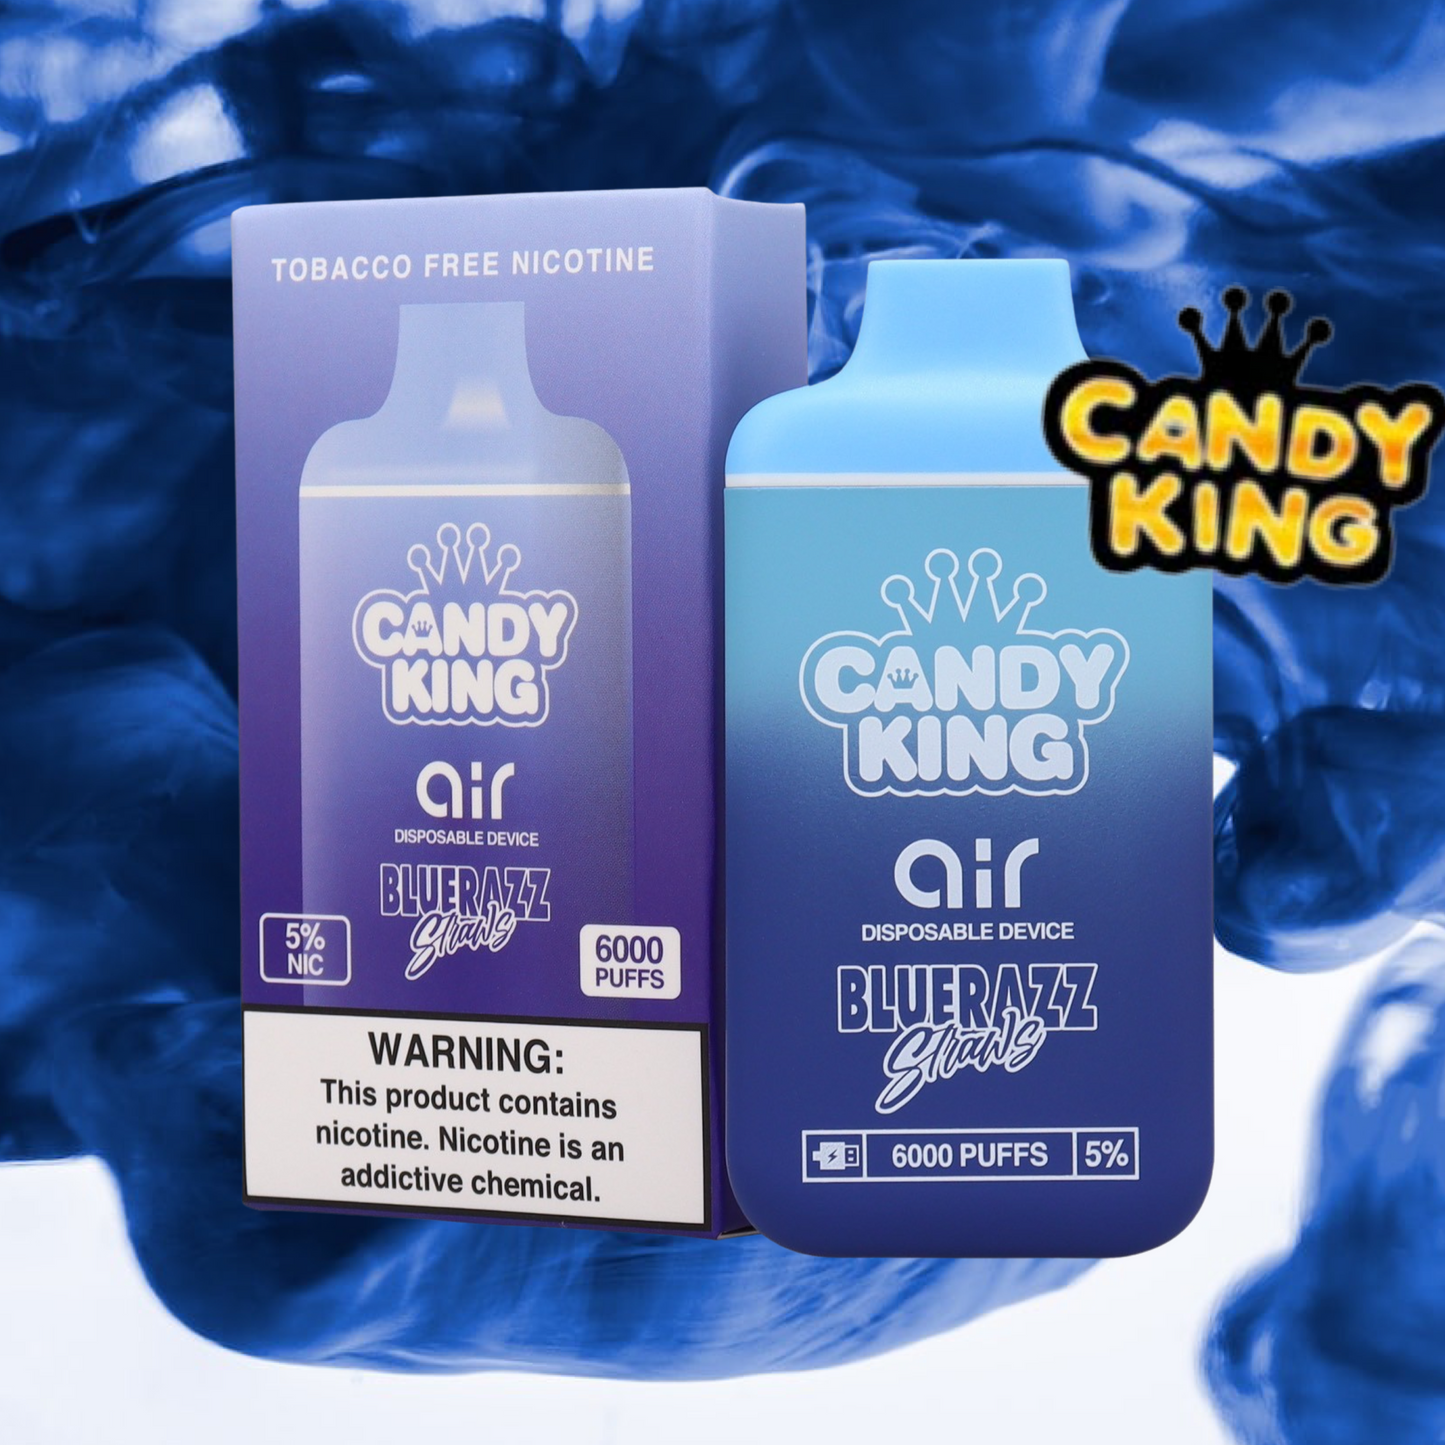 CAndy King Blue razz Straws